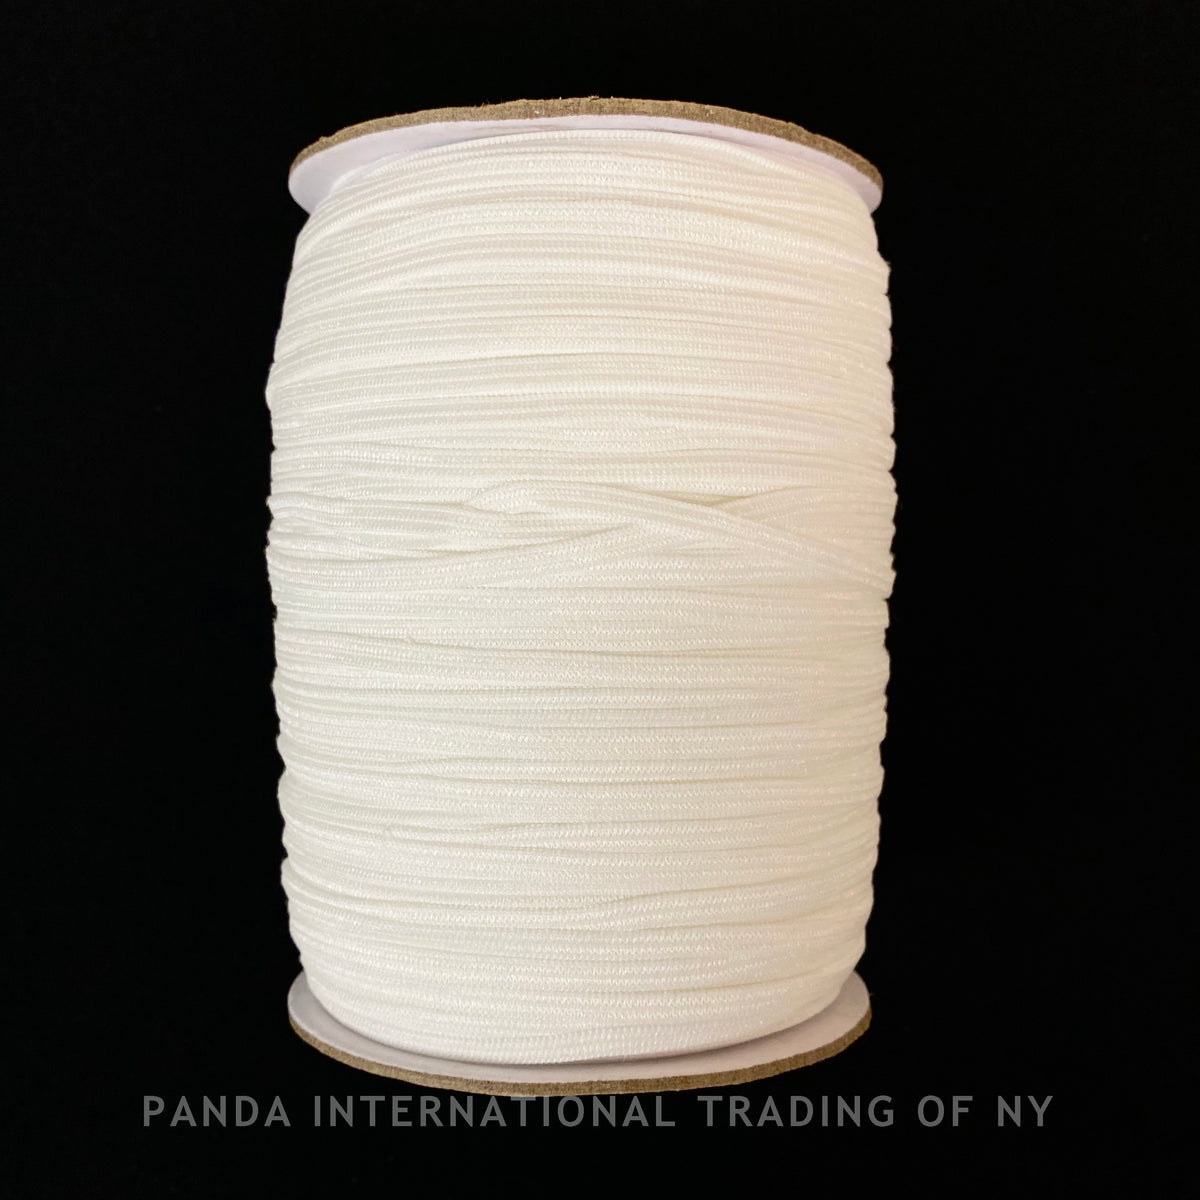 4mm Latex Free Knitted Elastic 288 Yards Panda Intl Trading Of Ny Inc